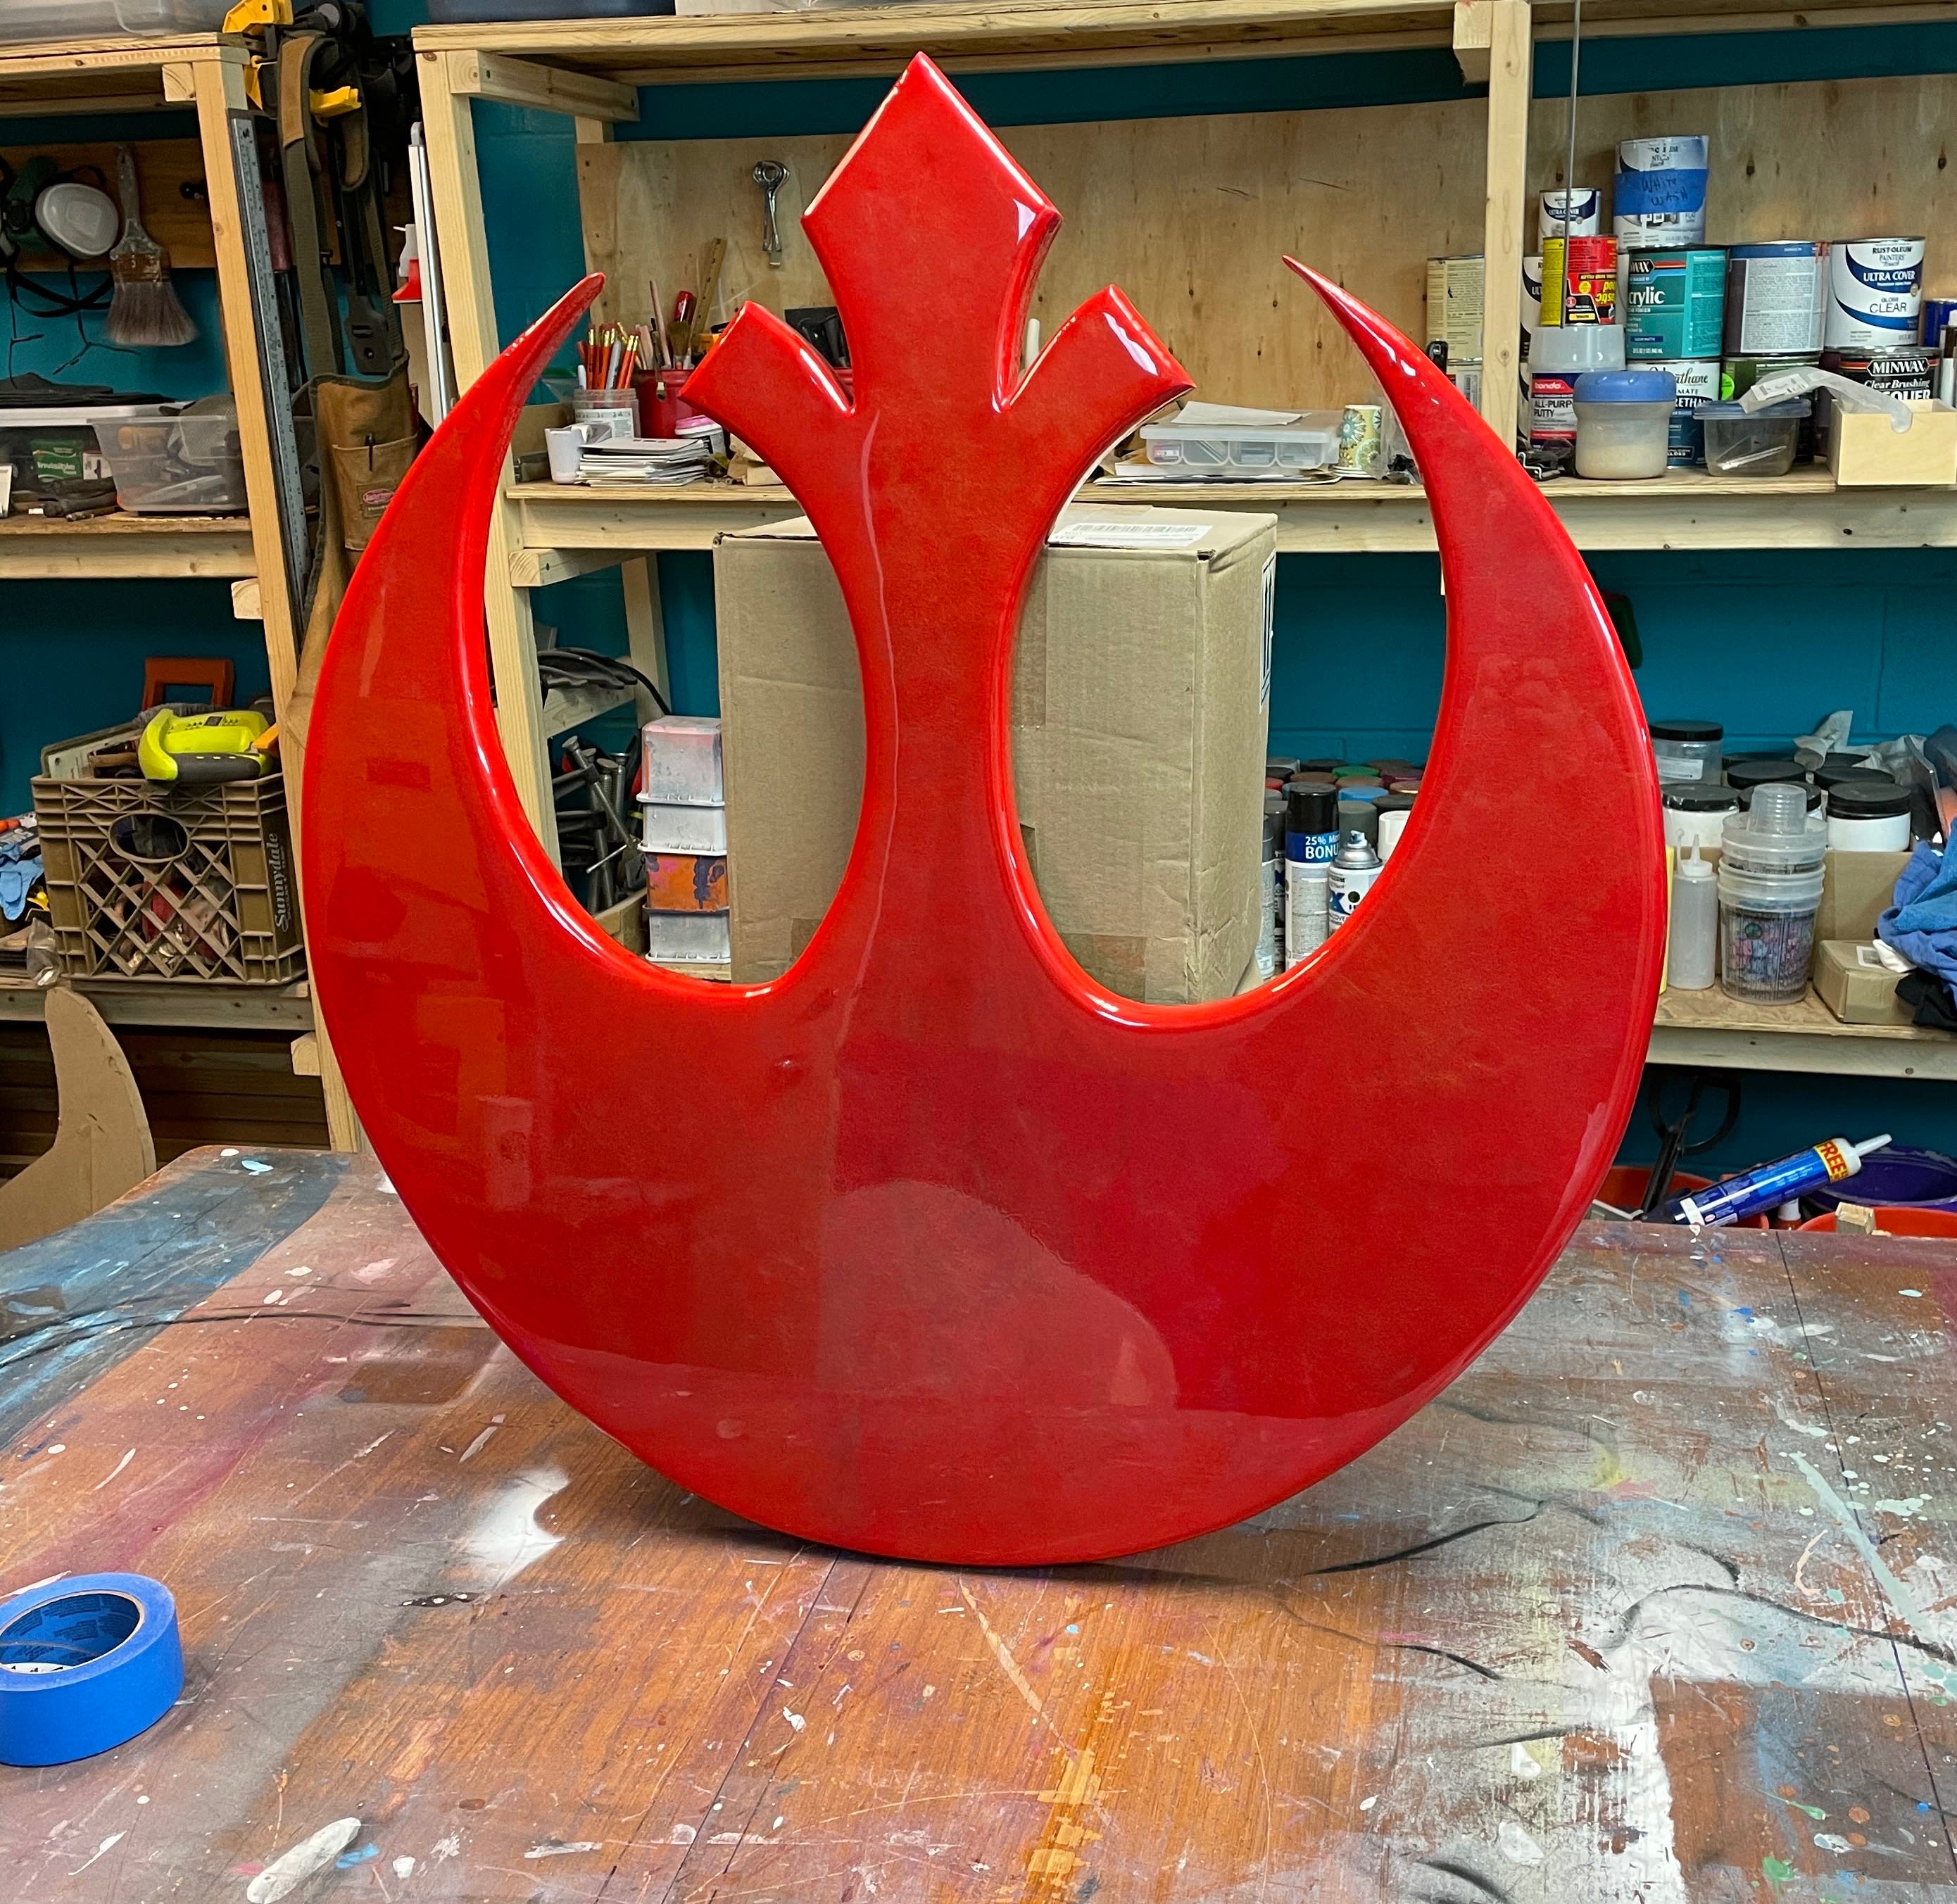 Star Wars Rebel Symbol - Featured Products - Peter Carnegie, Artist